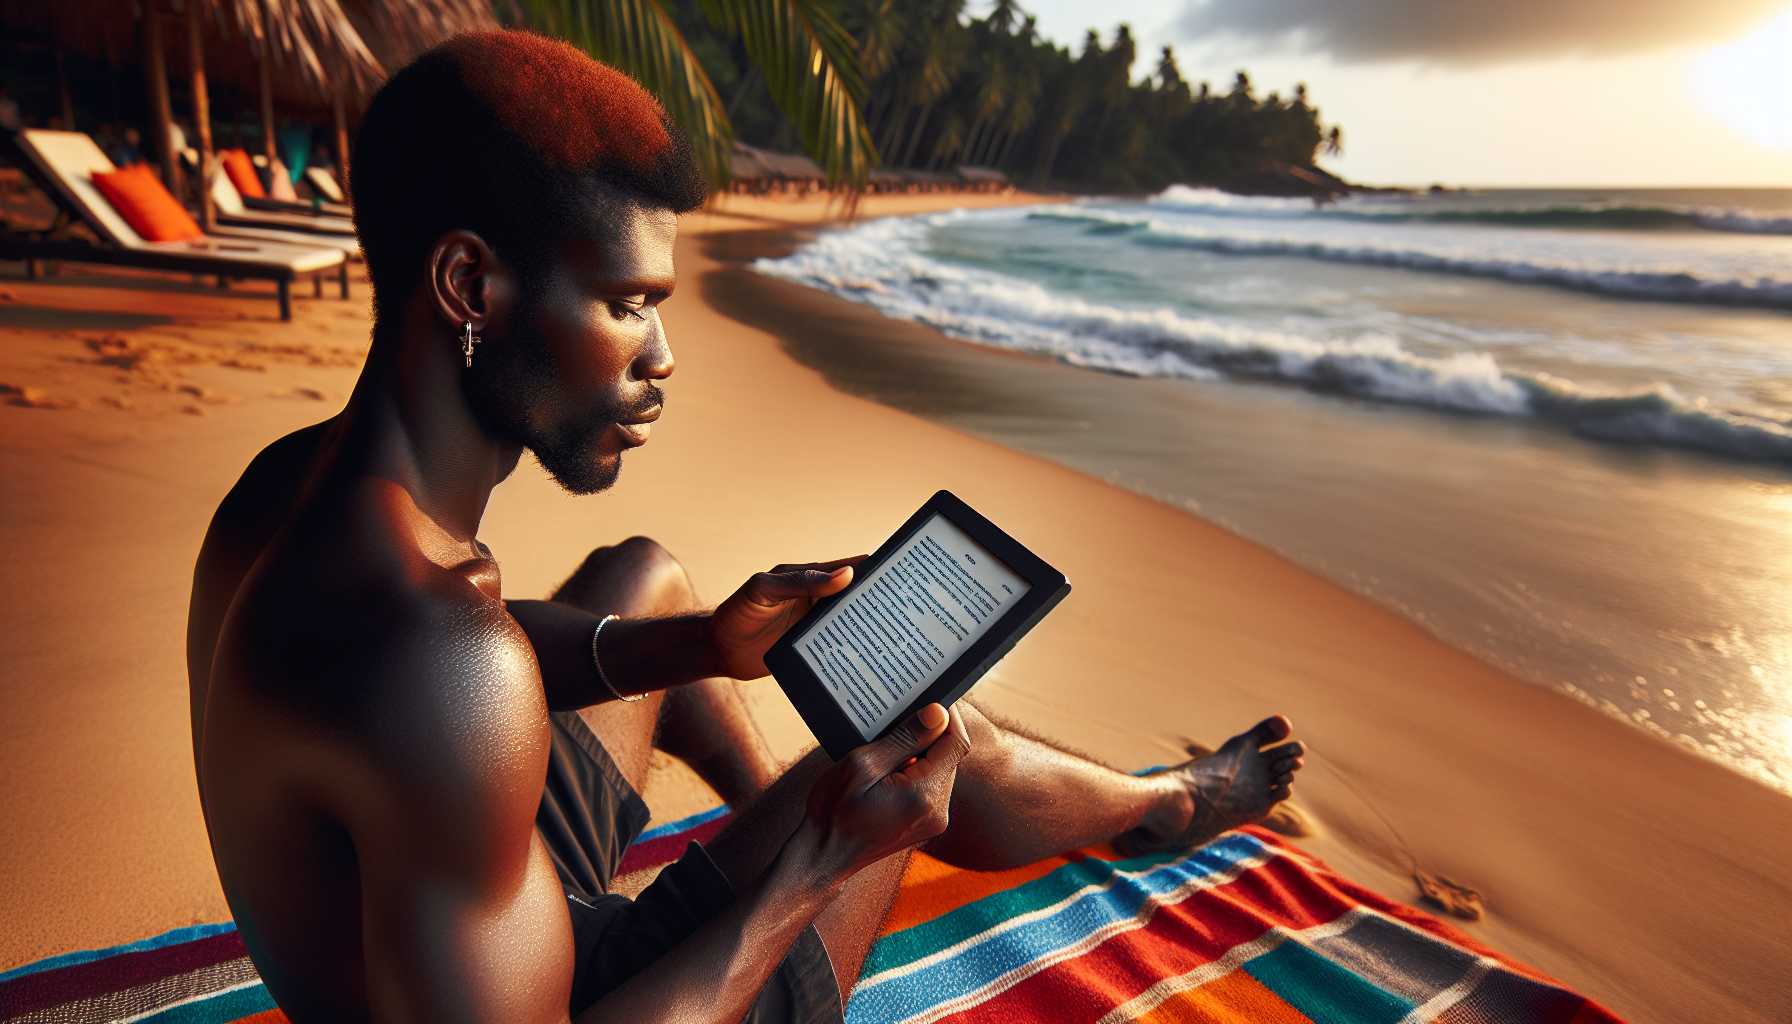 A person in Equatorial Guinea reading an e-reader on a beach.